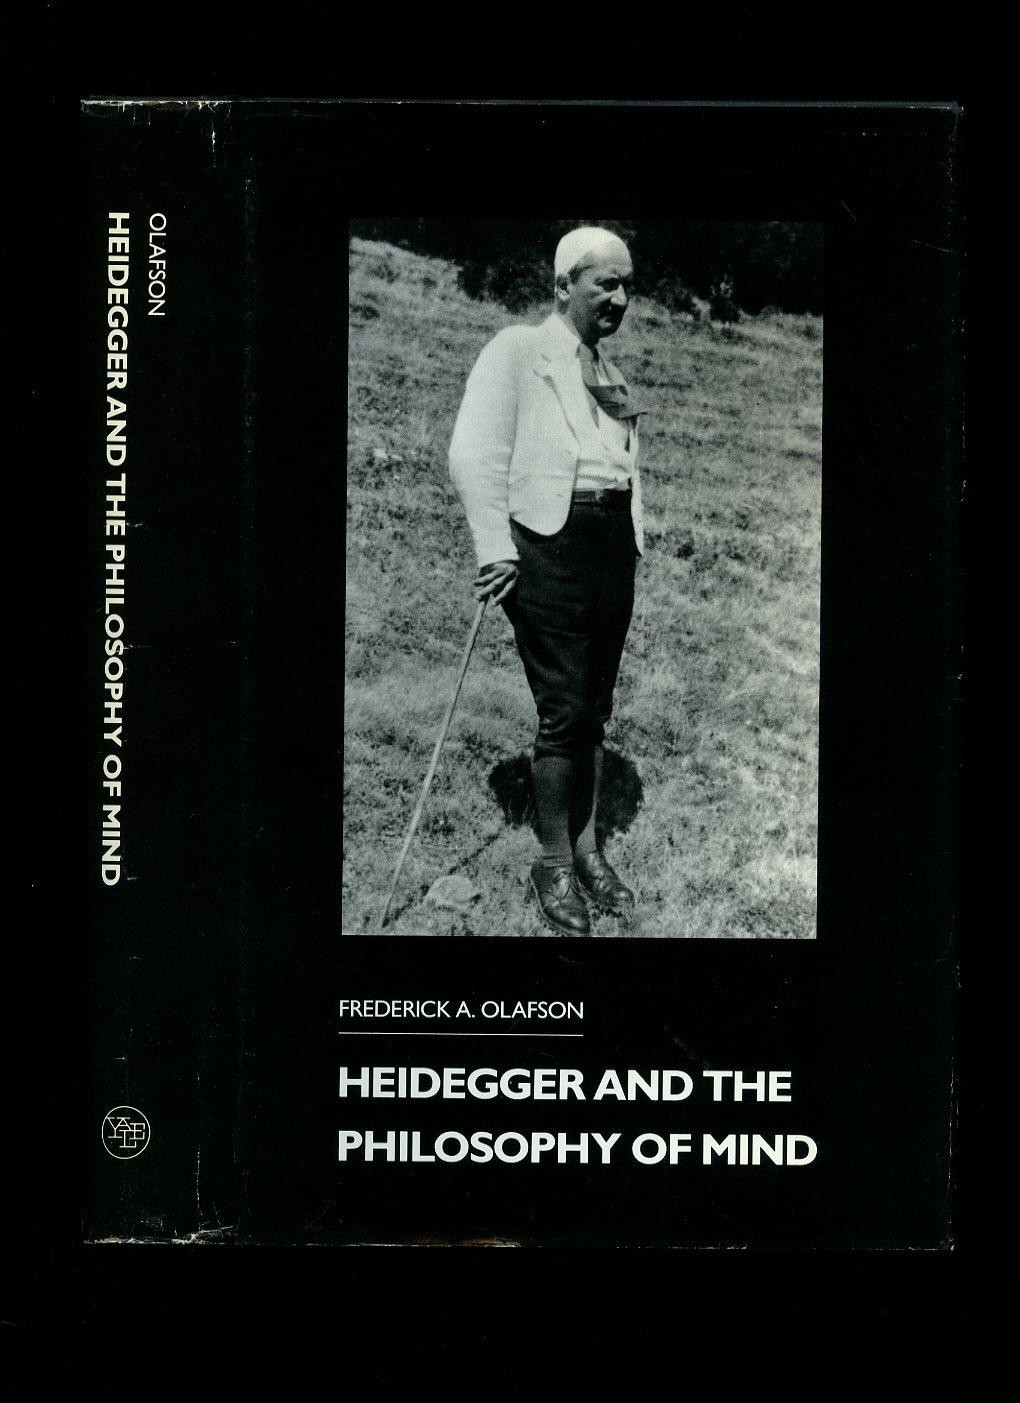 Heidegger and the Philosophy of Mind